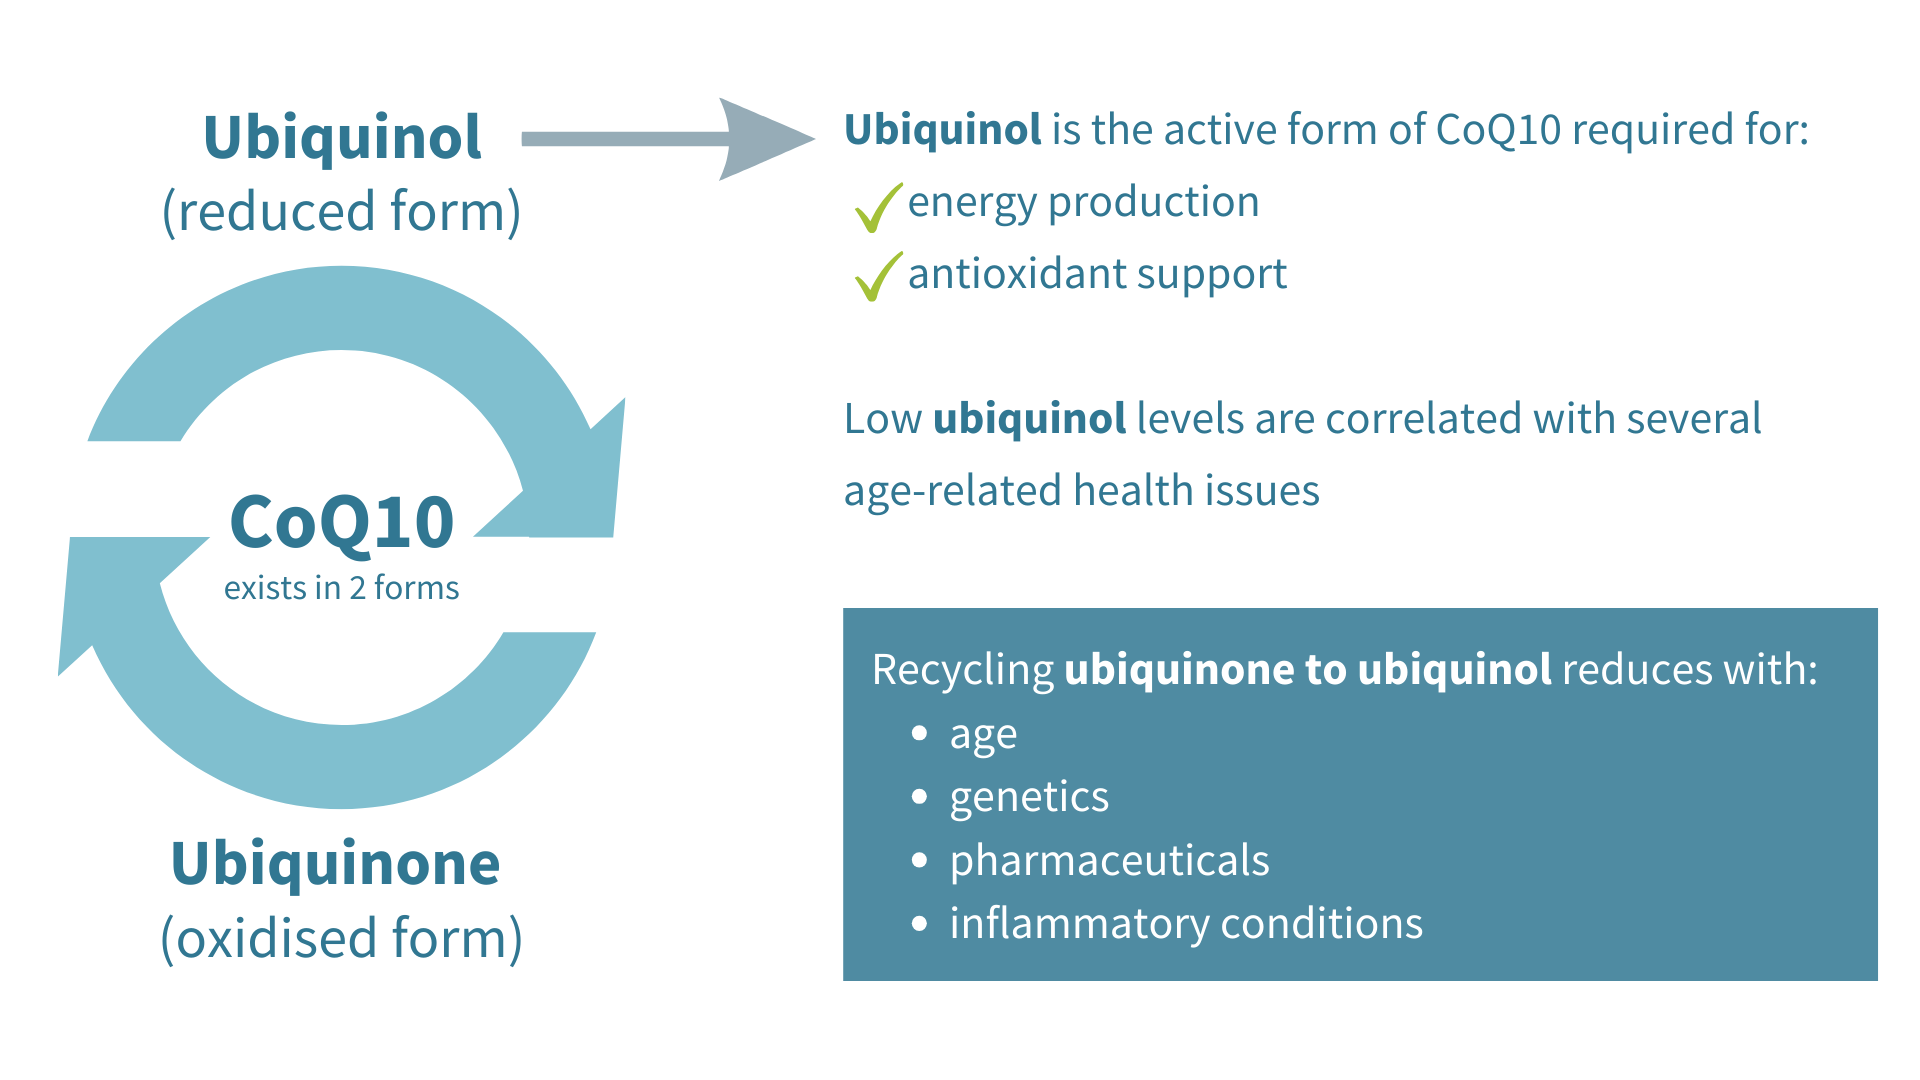 The recycling of ubiquinone into ubiquinol